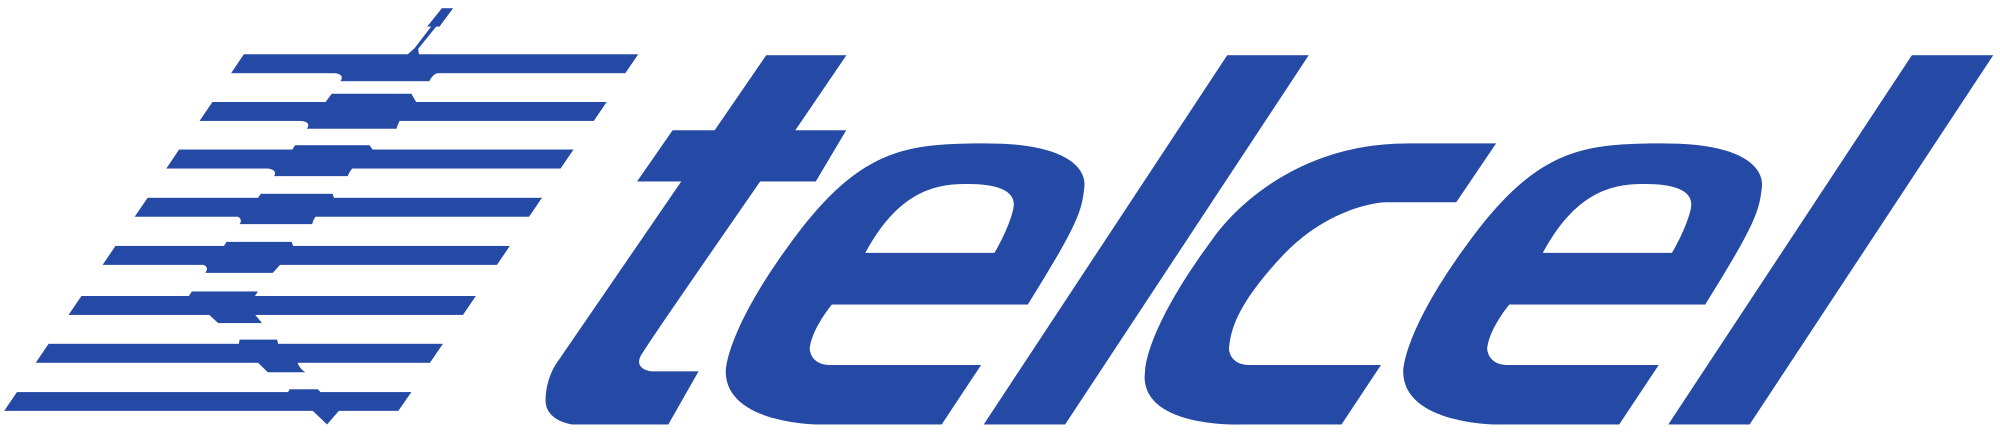 Telcel Brand Logo